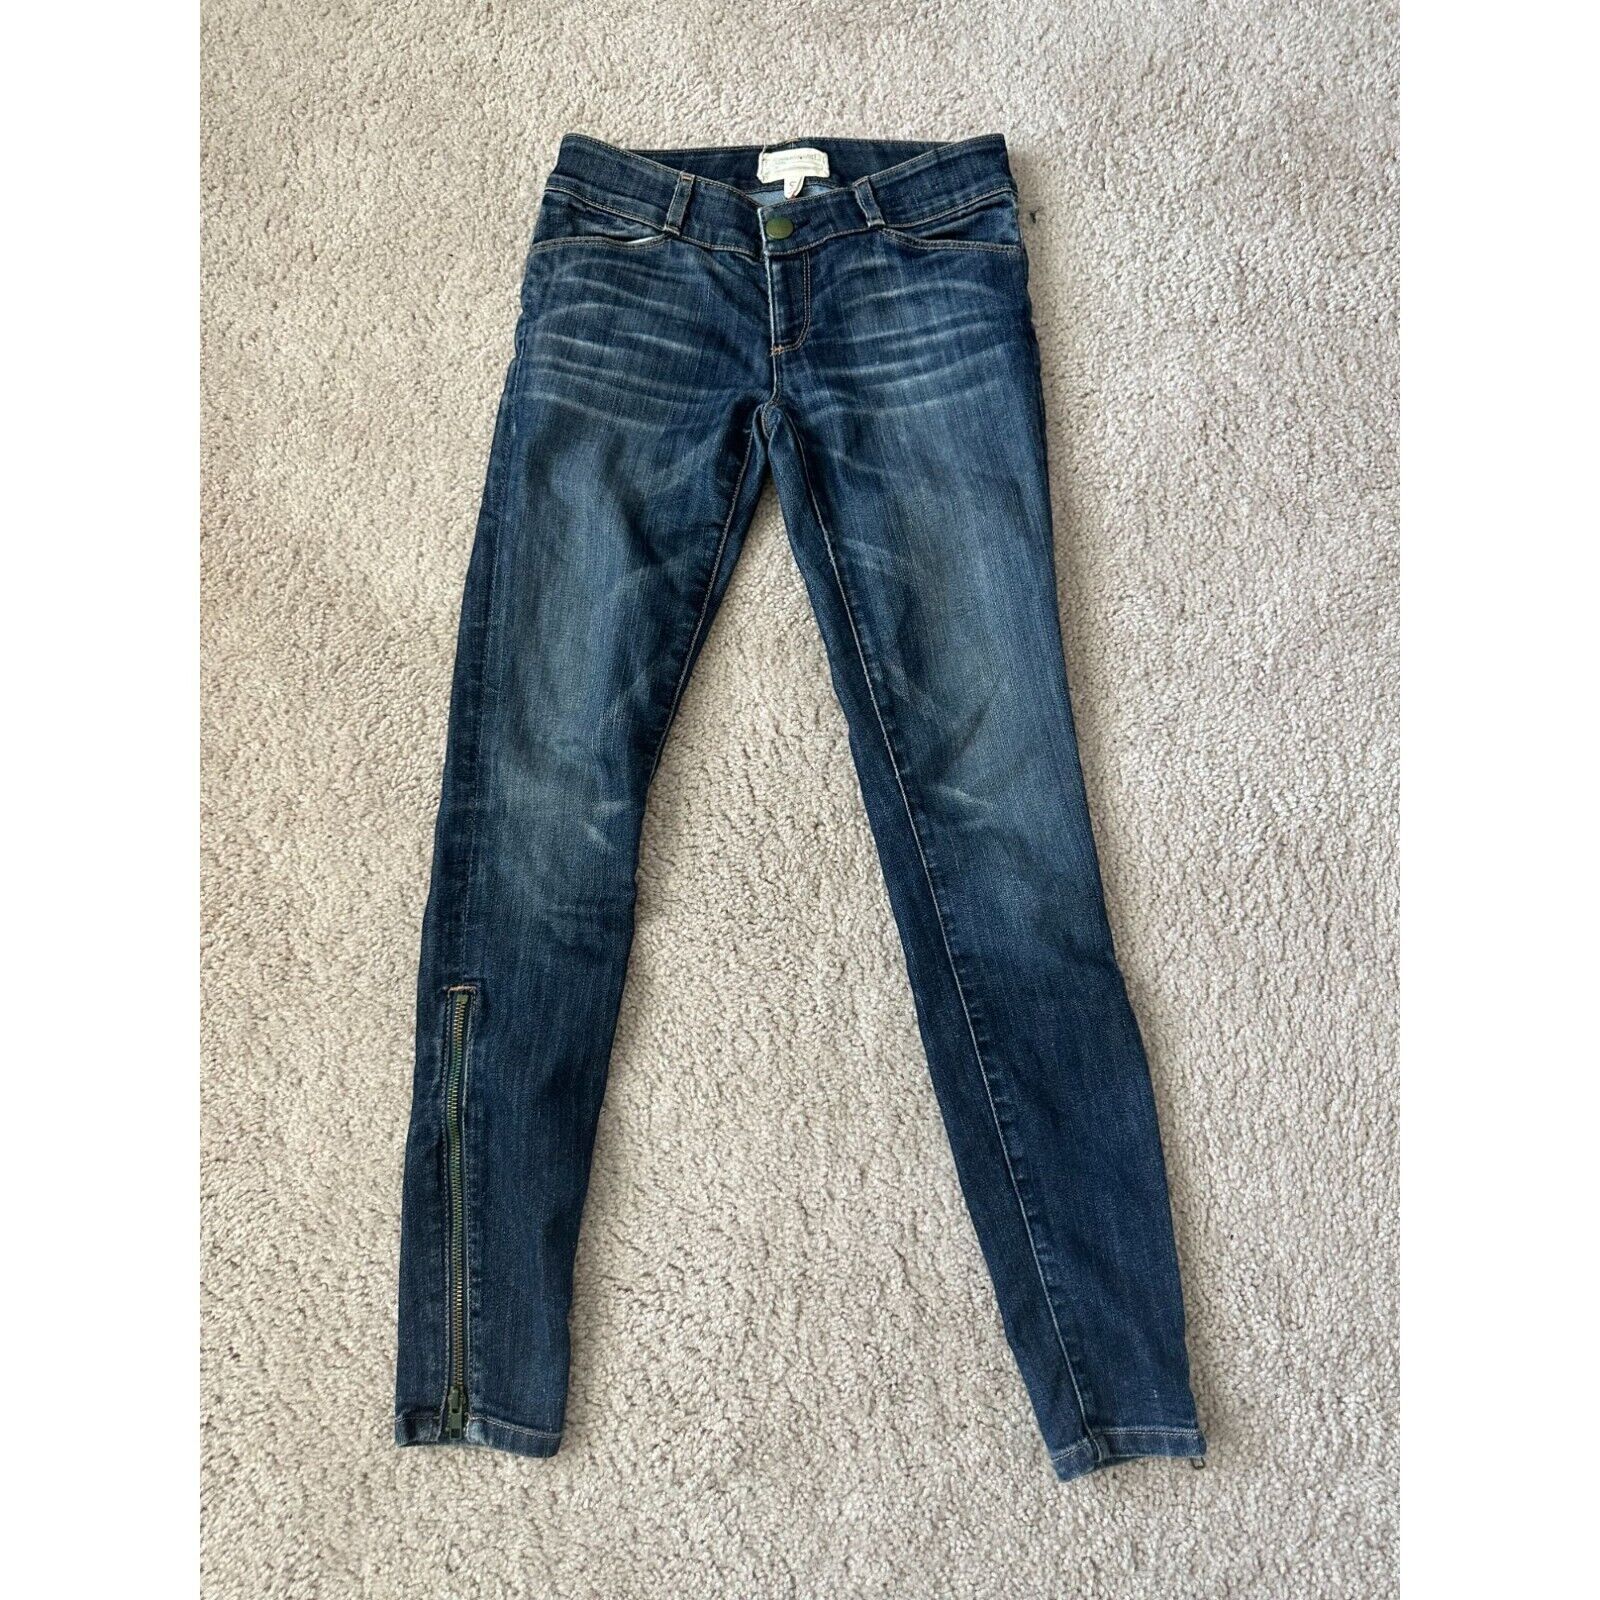 CURRENT ELLIOTT Denim Side Zip Skinny Jeans Sz 24 - image 1